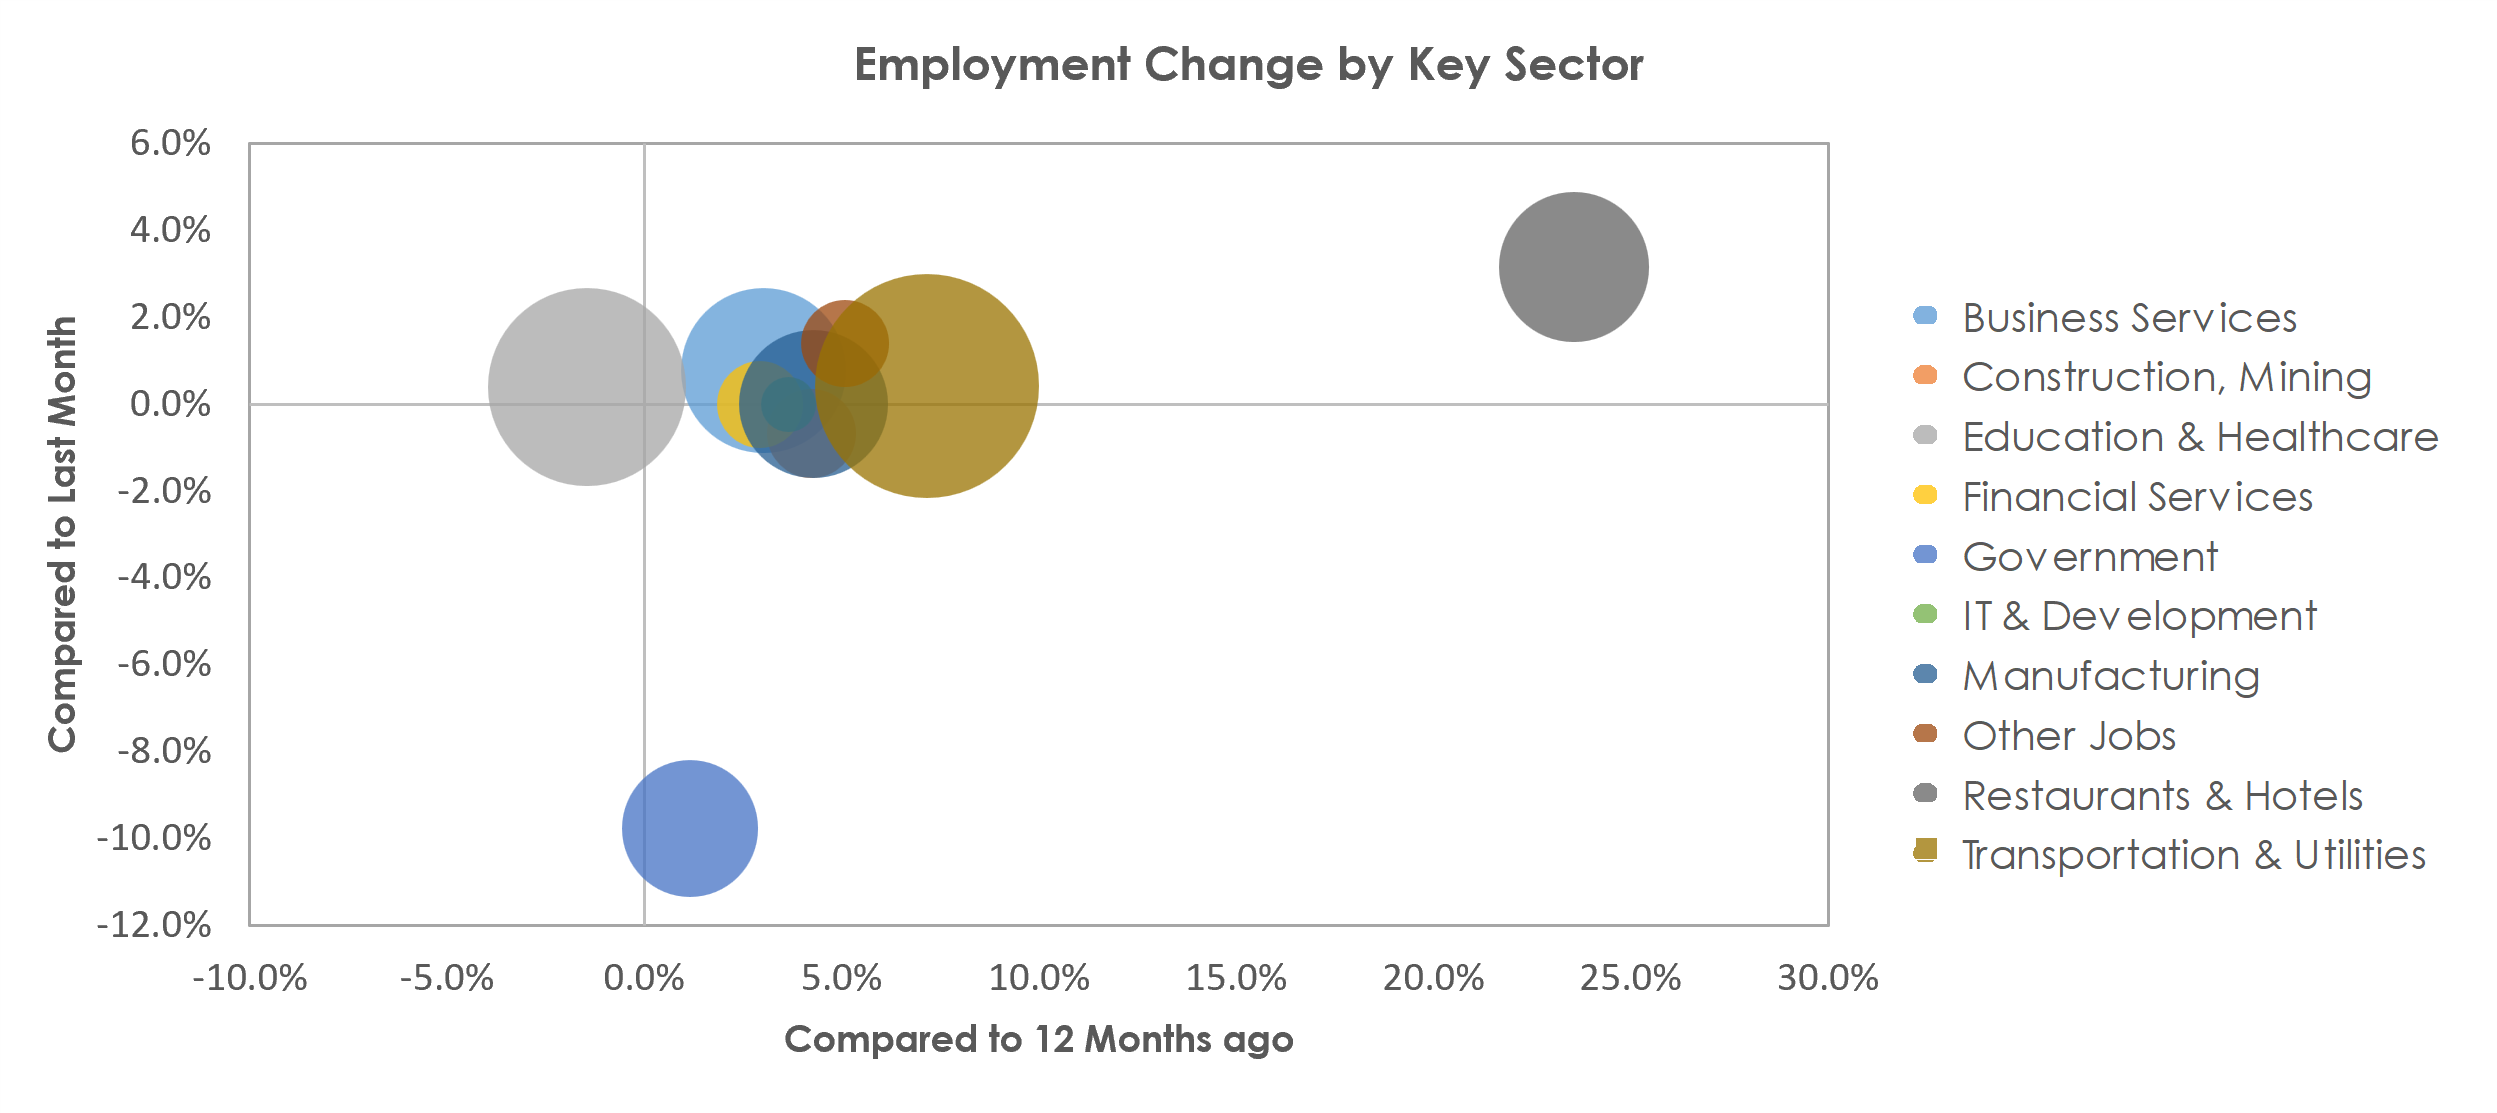 Allentown-Bethlehem-Easton, PA-NJ Unemployment by Industry July 2022